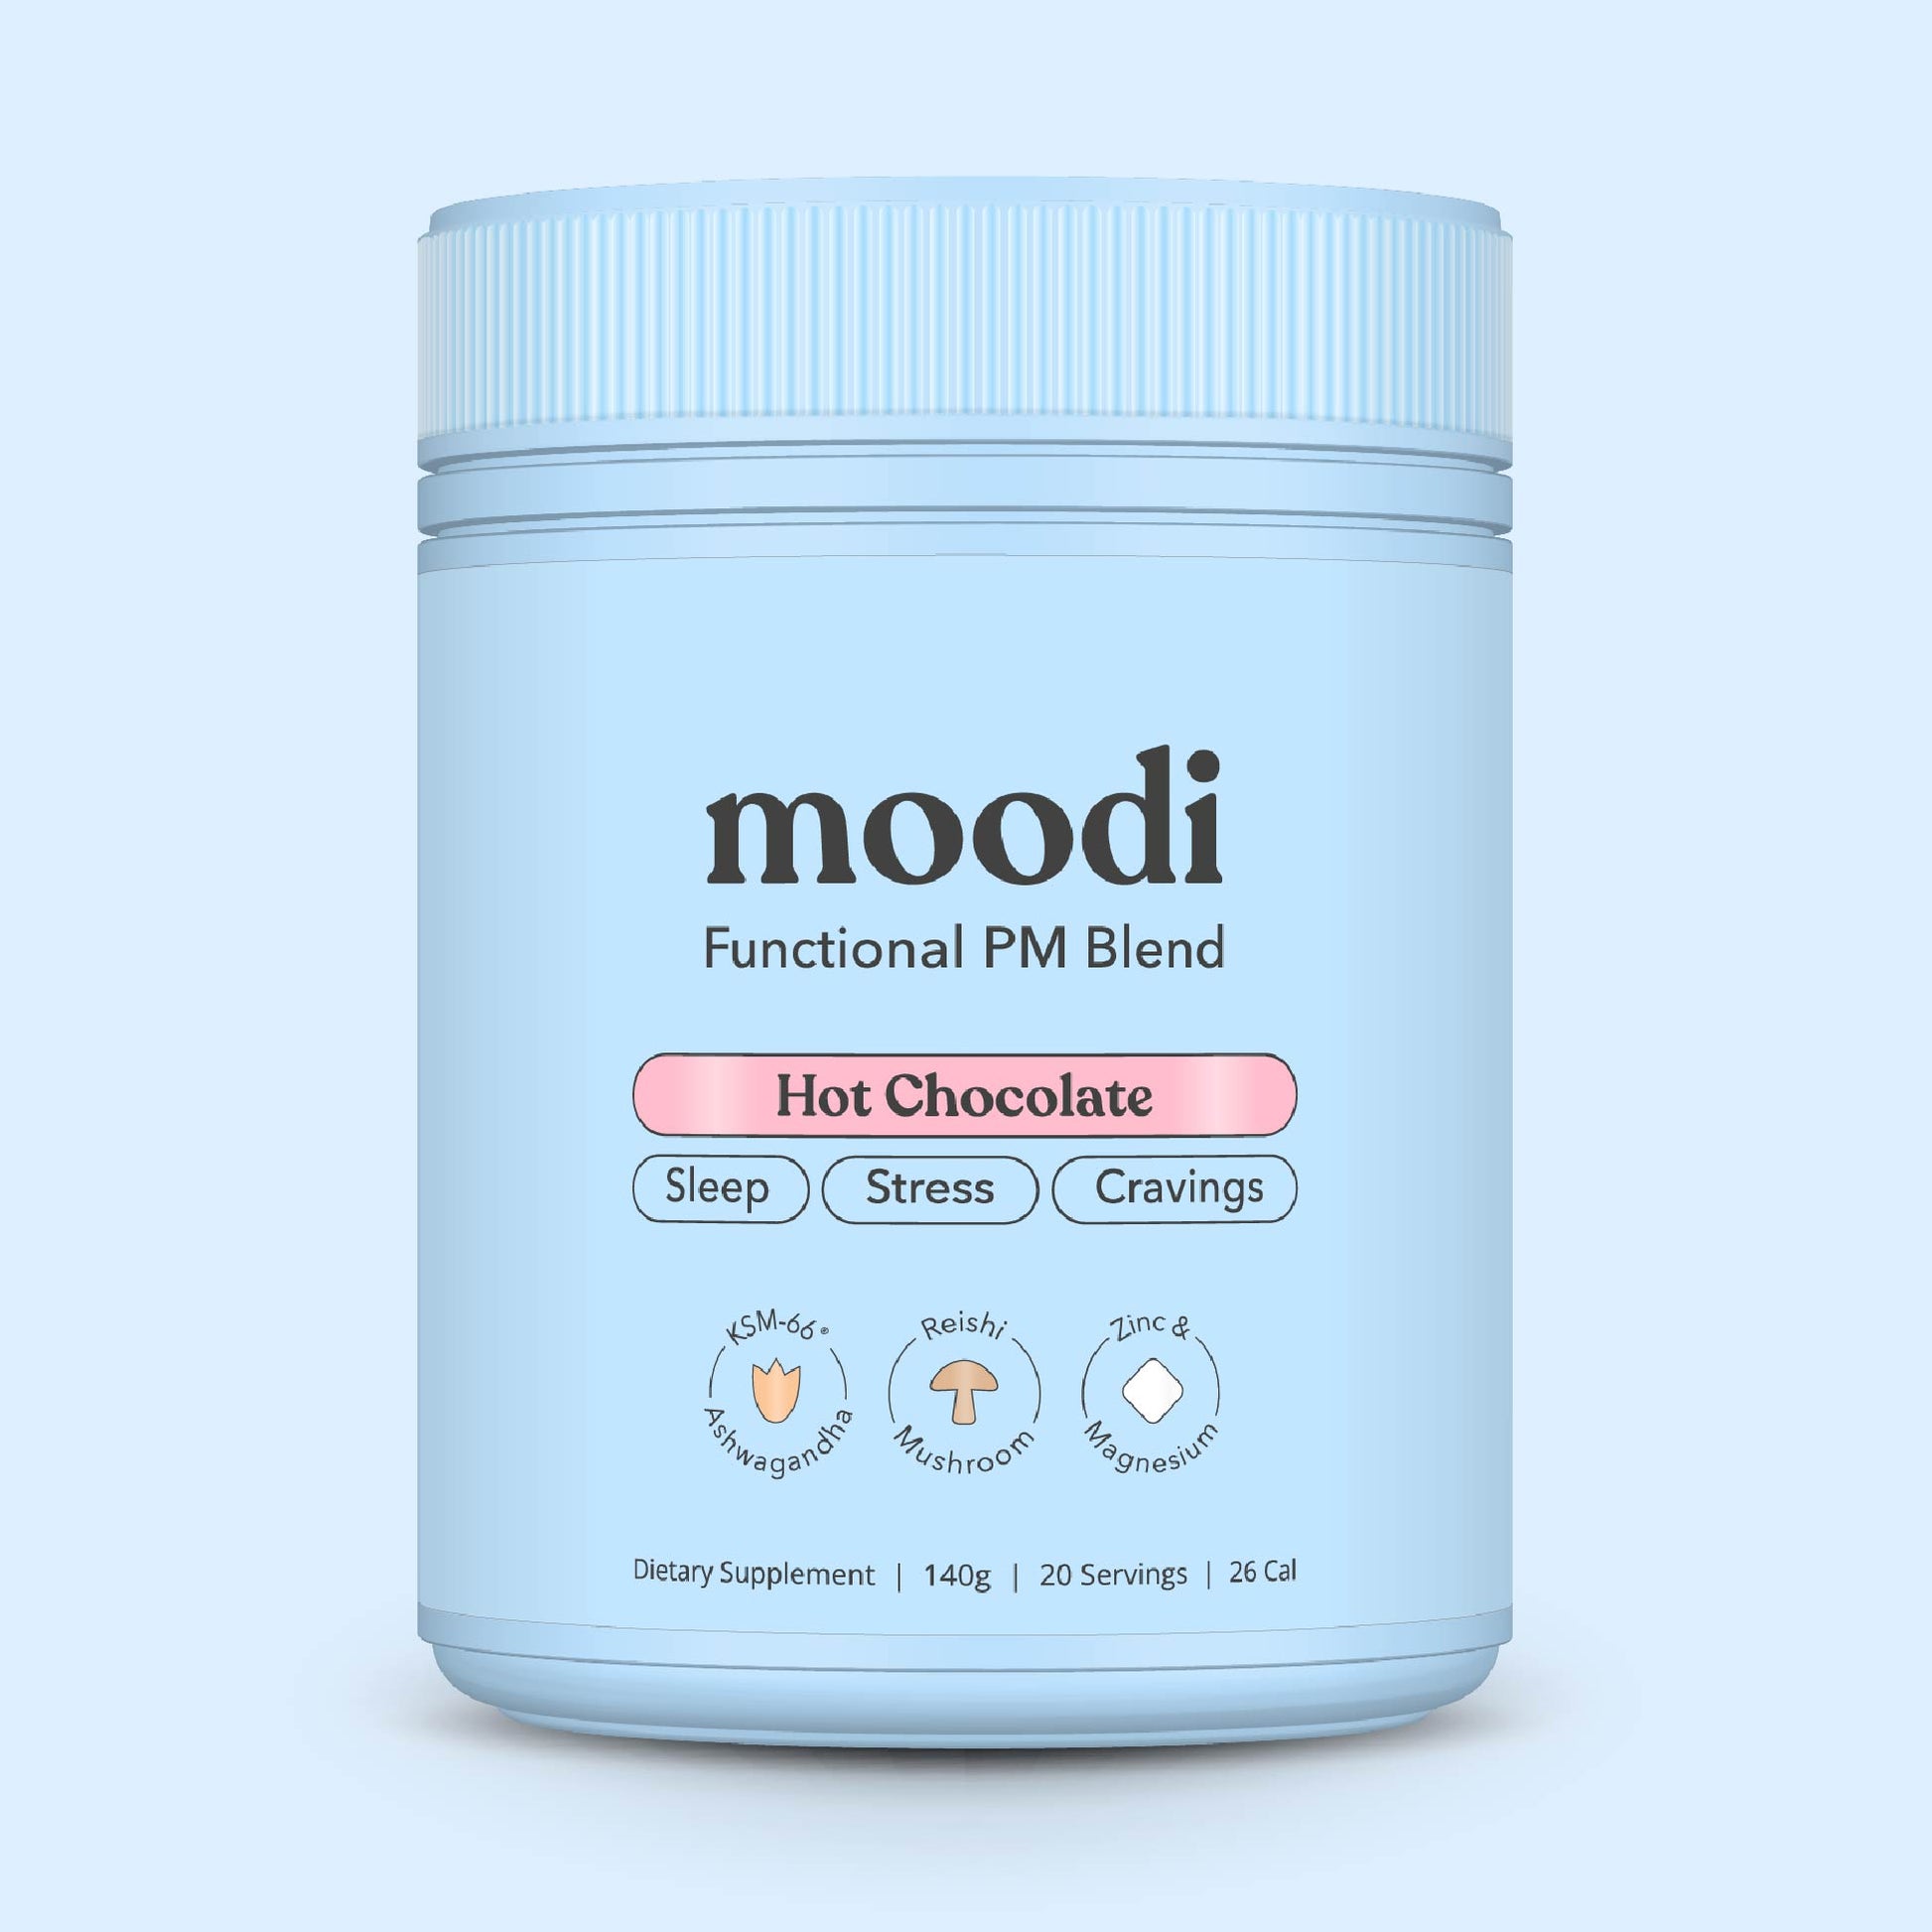 Hot Chocolate - Moodi - Functional PM Blend